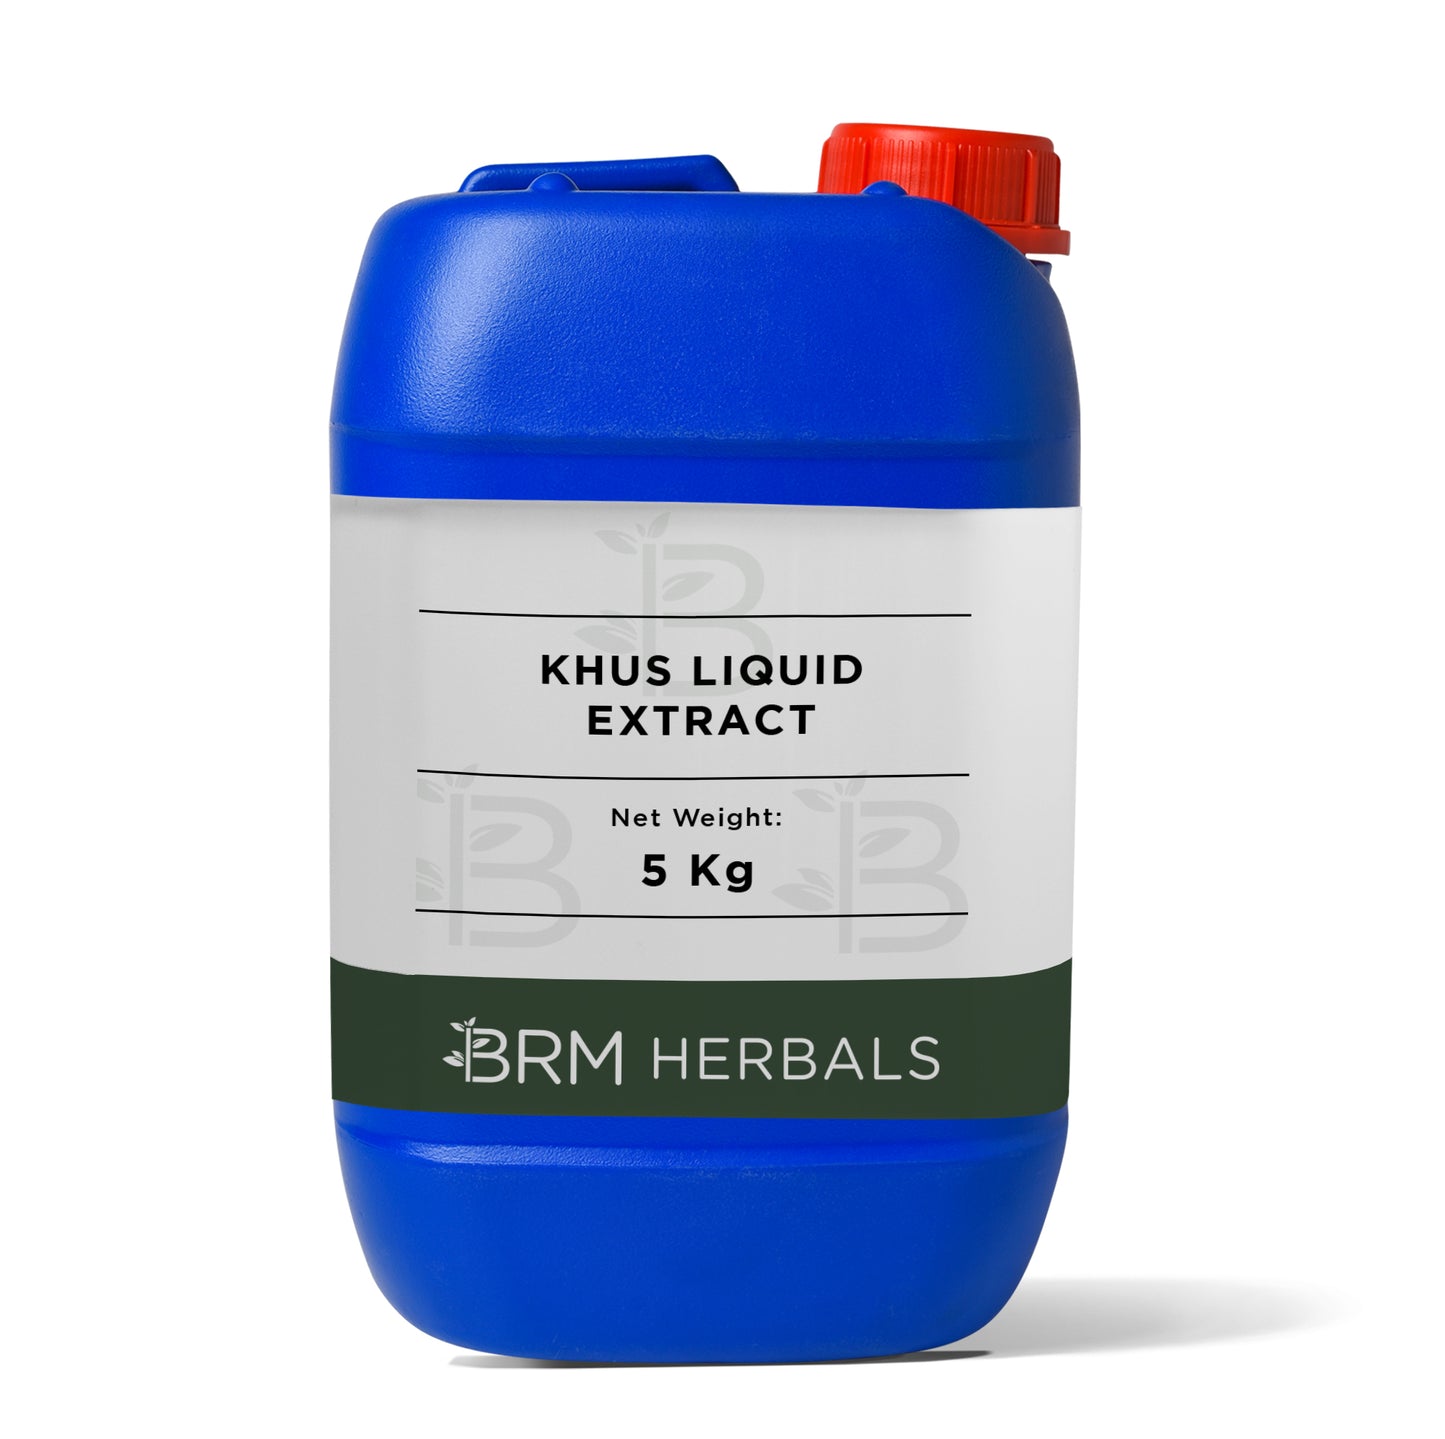 Khus Liquid Extract